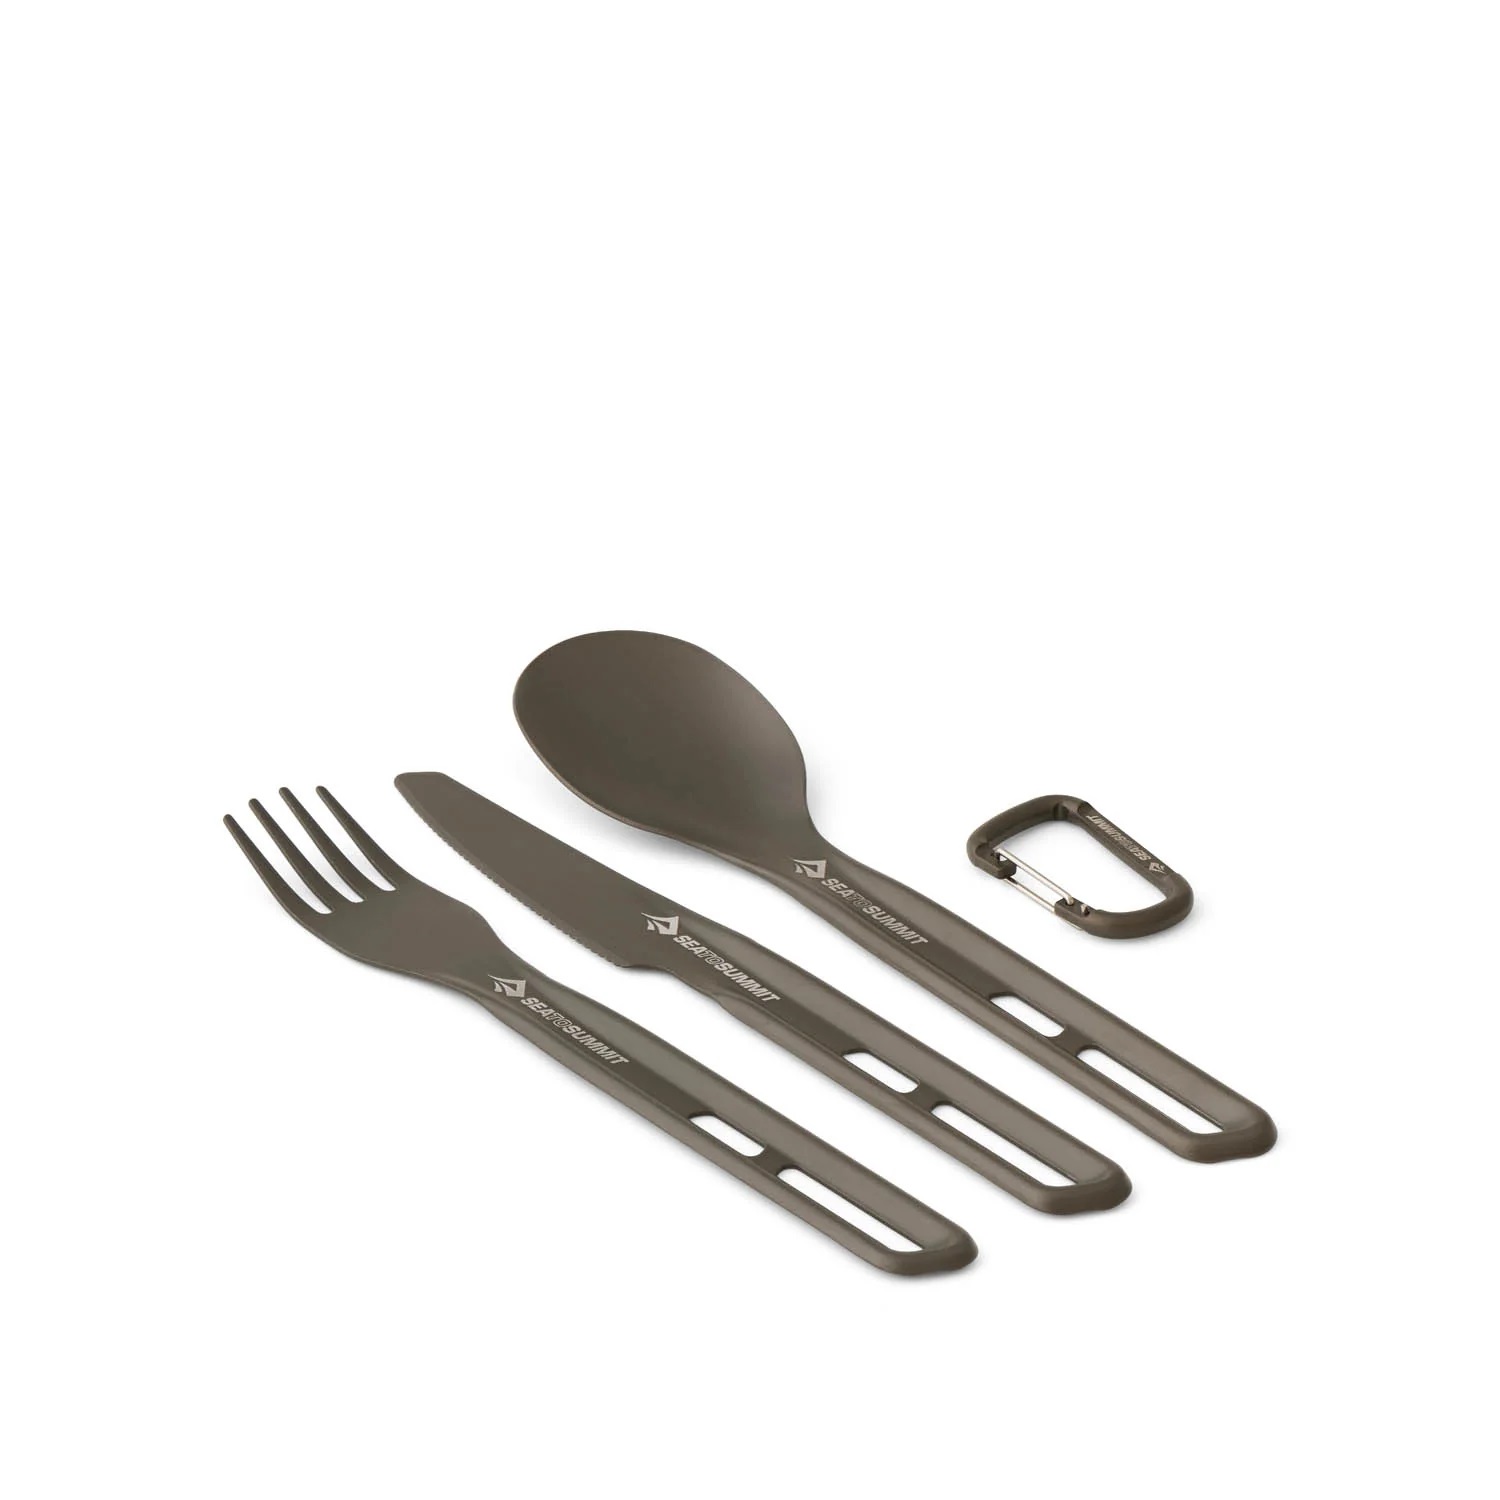 Frontier UL Cutlery Set - [3 Piece]